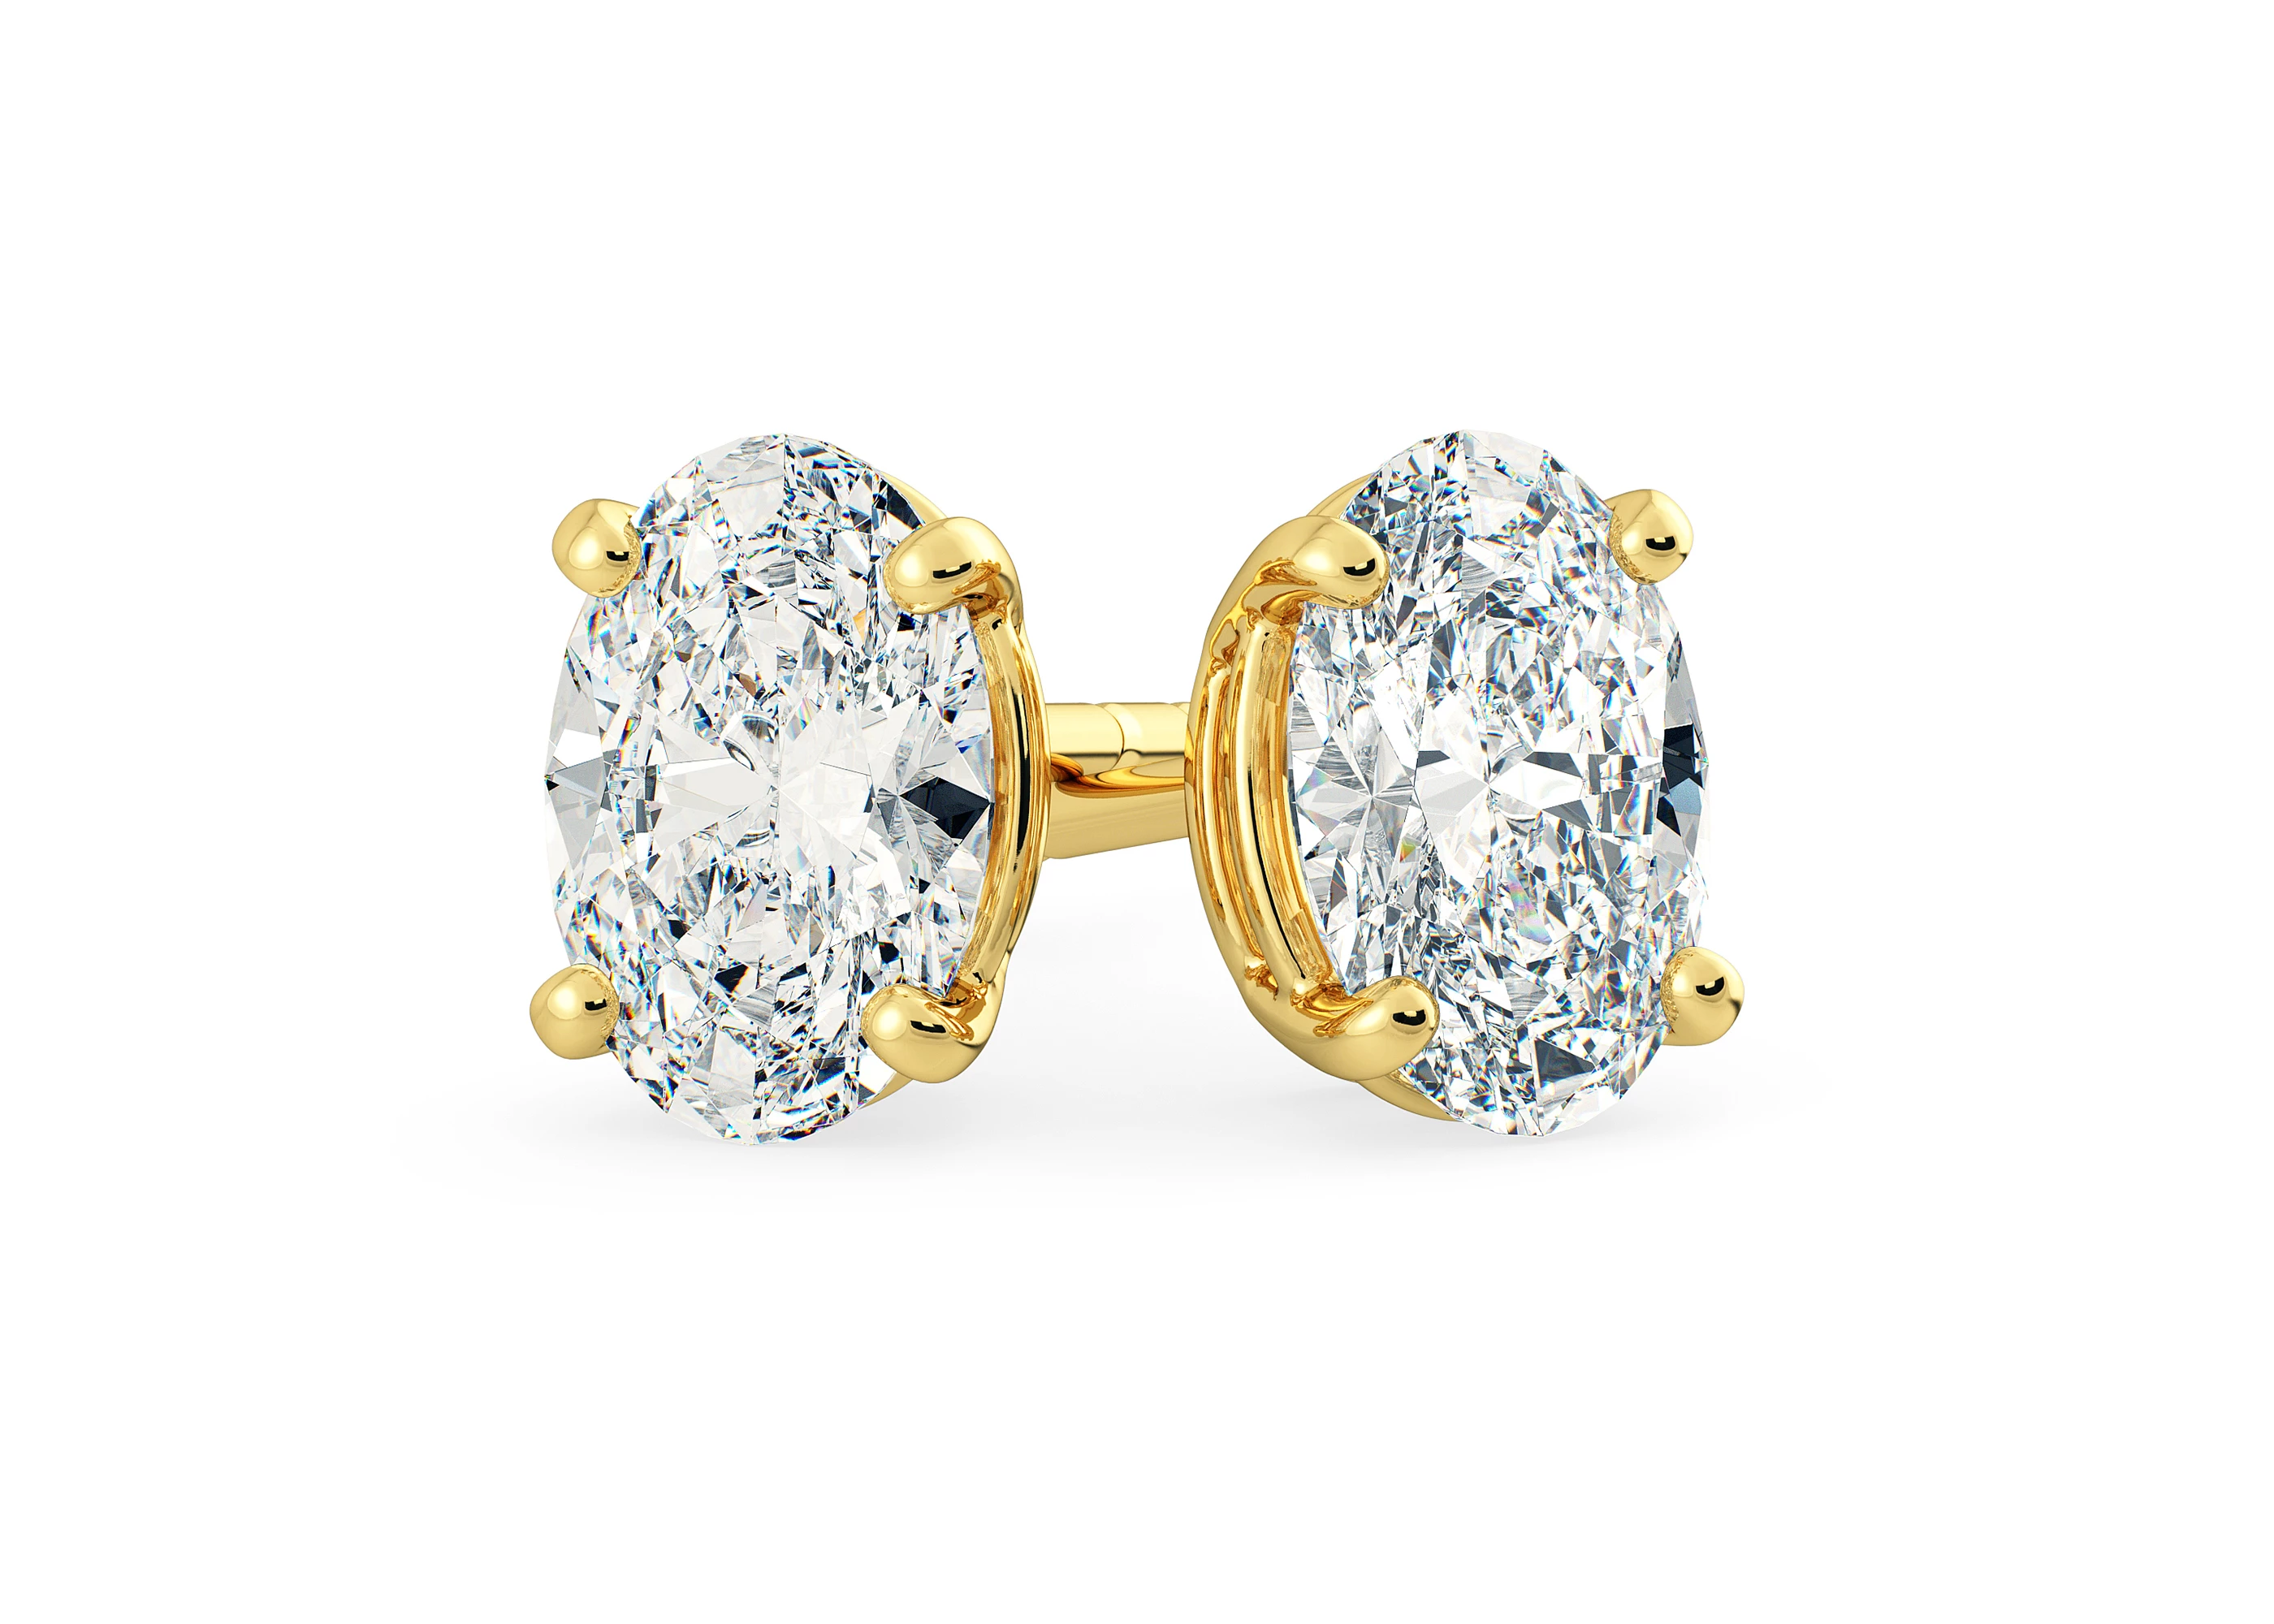 Half Carat Oval Diamond Stud Earrings in 18K Yellow Gold